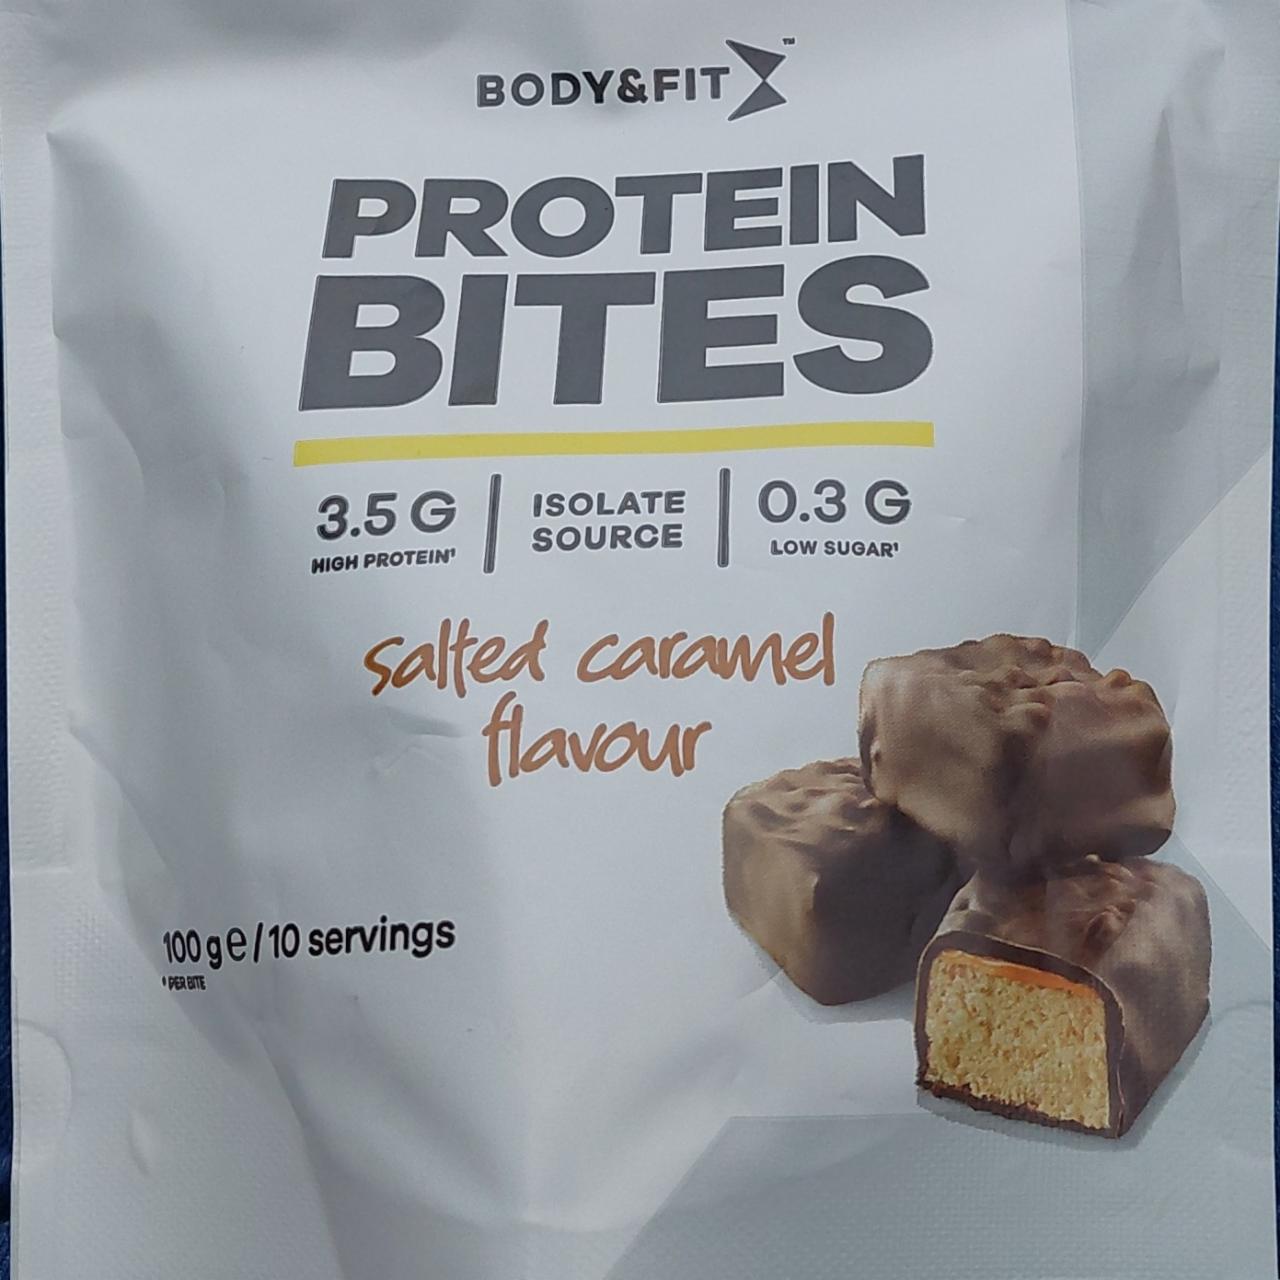 Fotografie - Protein bites salted caramel flavour Body&fit